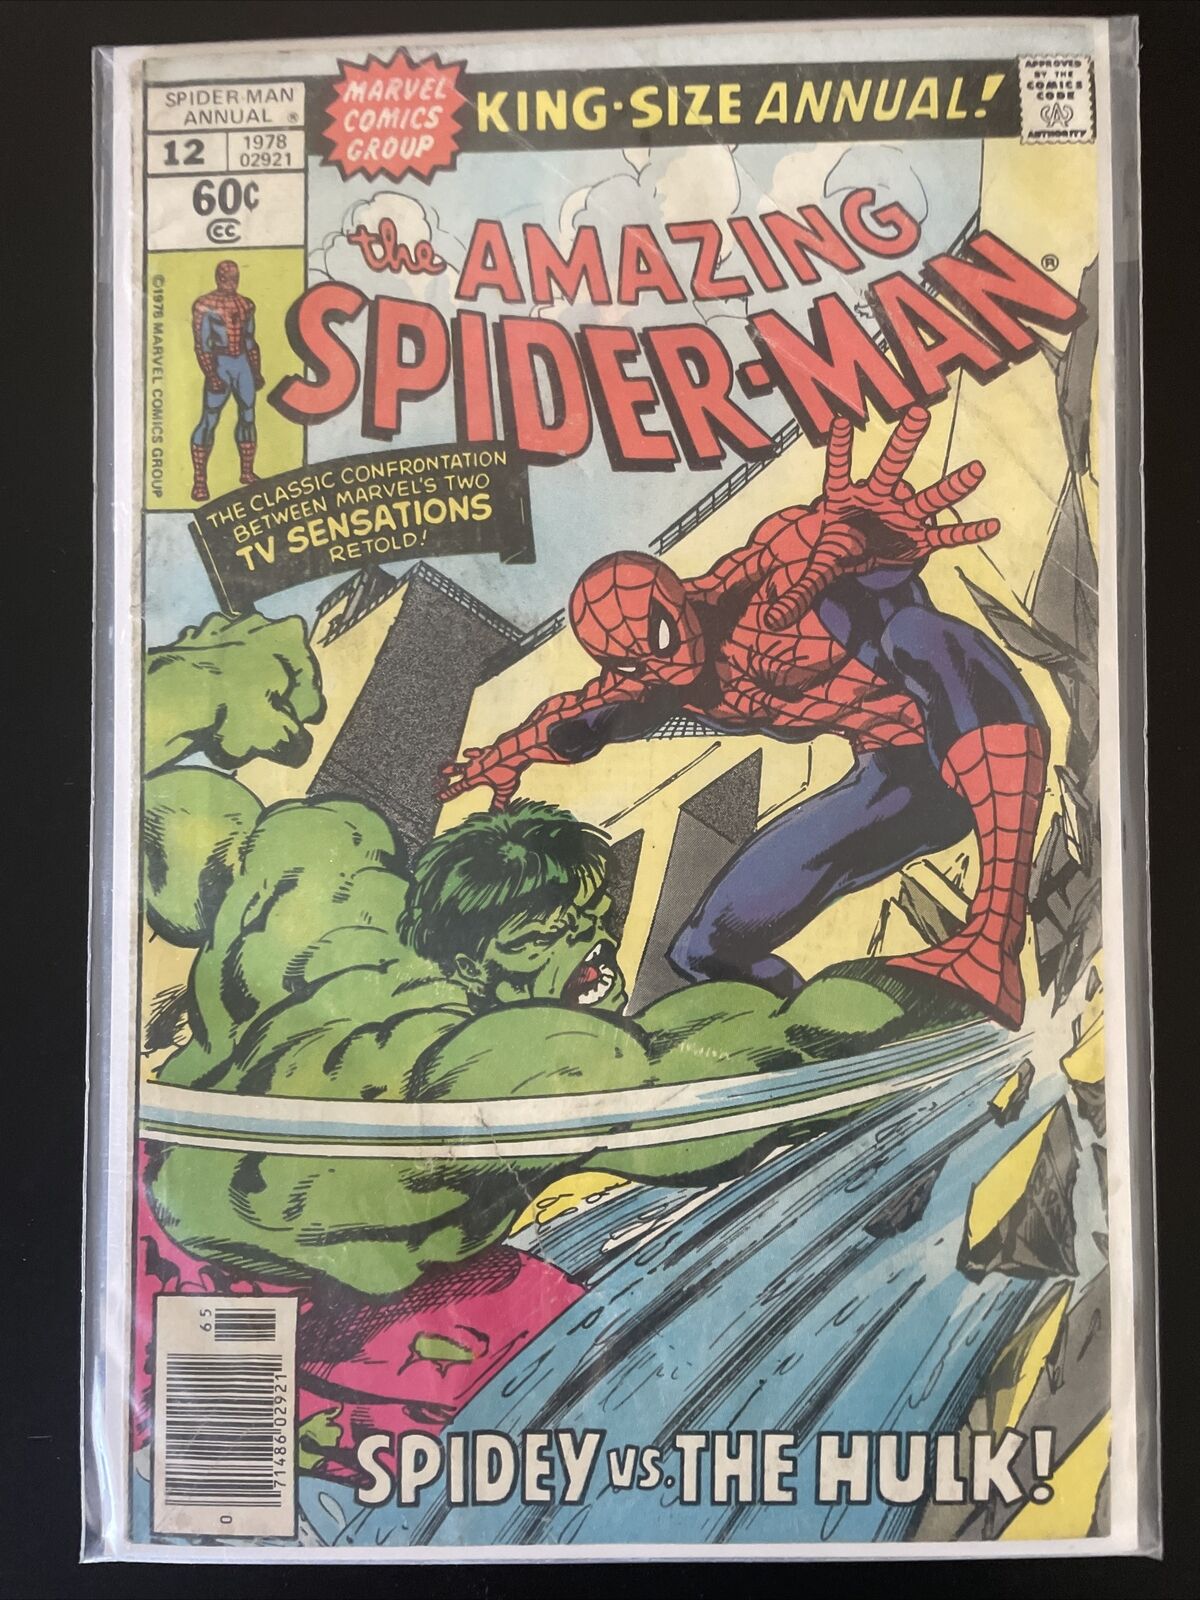 The Amazing Spider-Man #12 Marvel Comics King Size Annual 1978 Spidey vs. Hulk